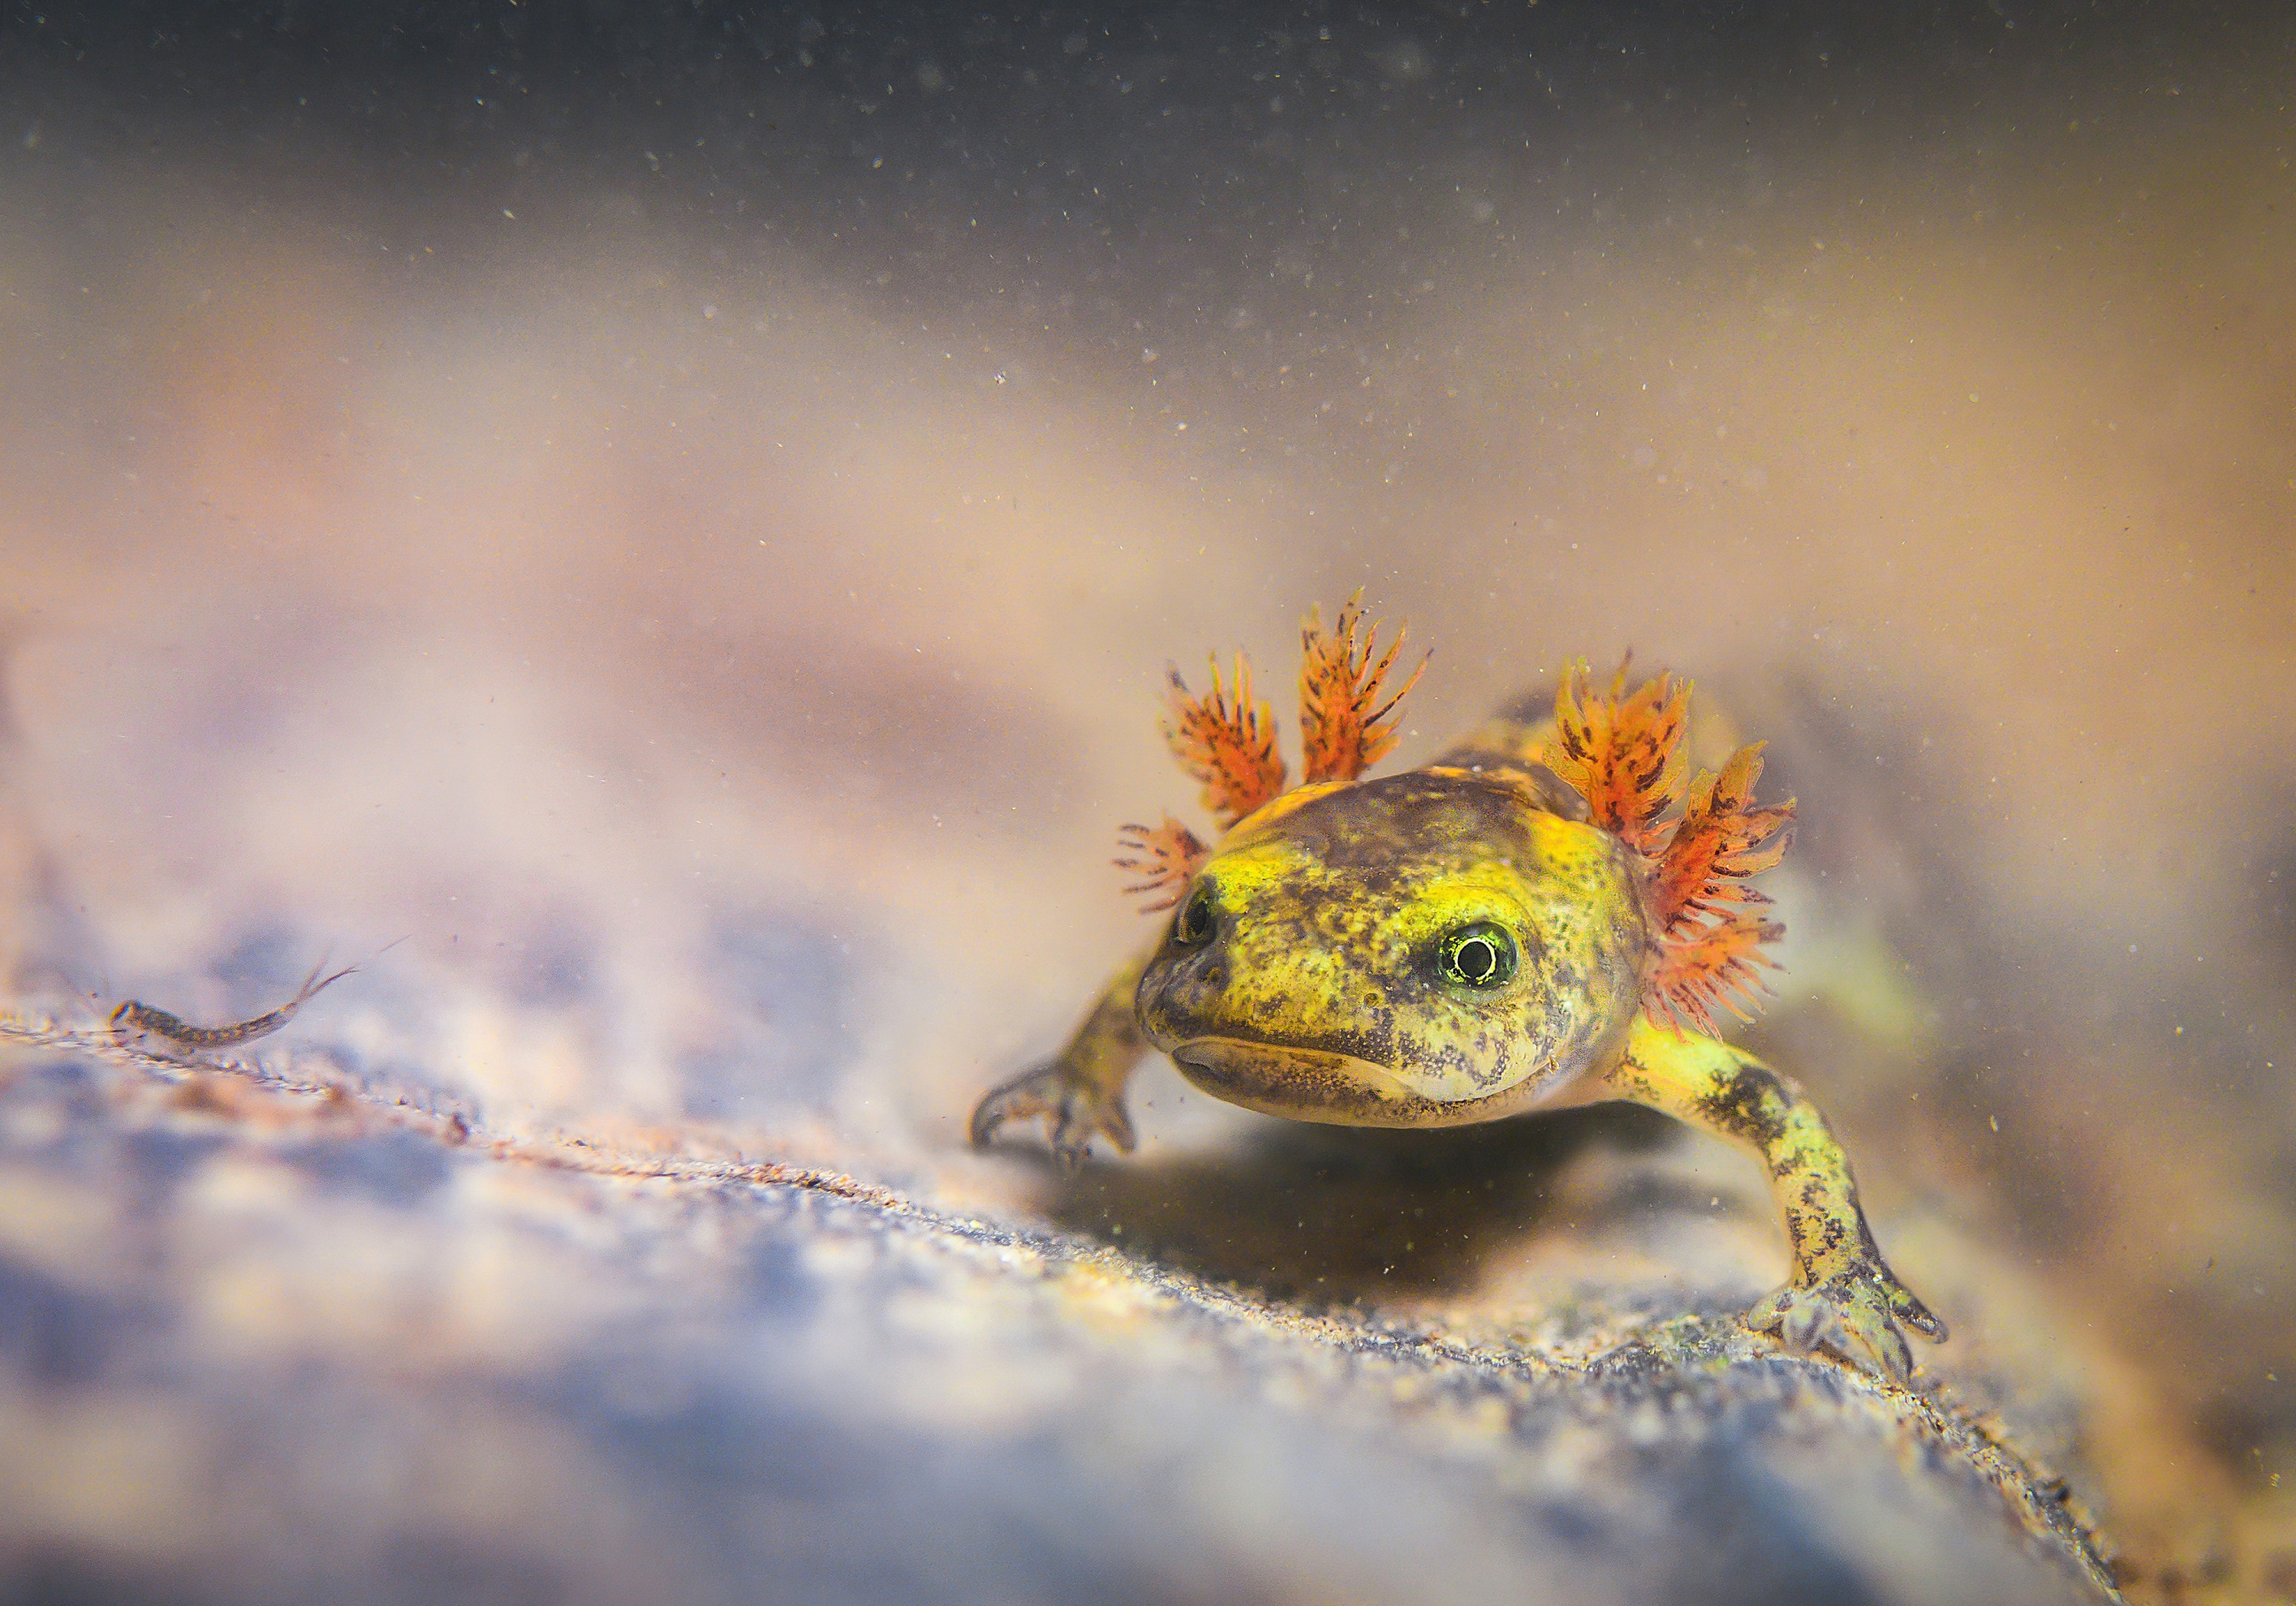 a photo of a salamander